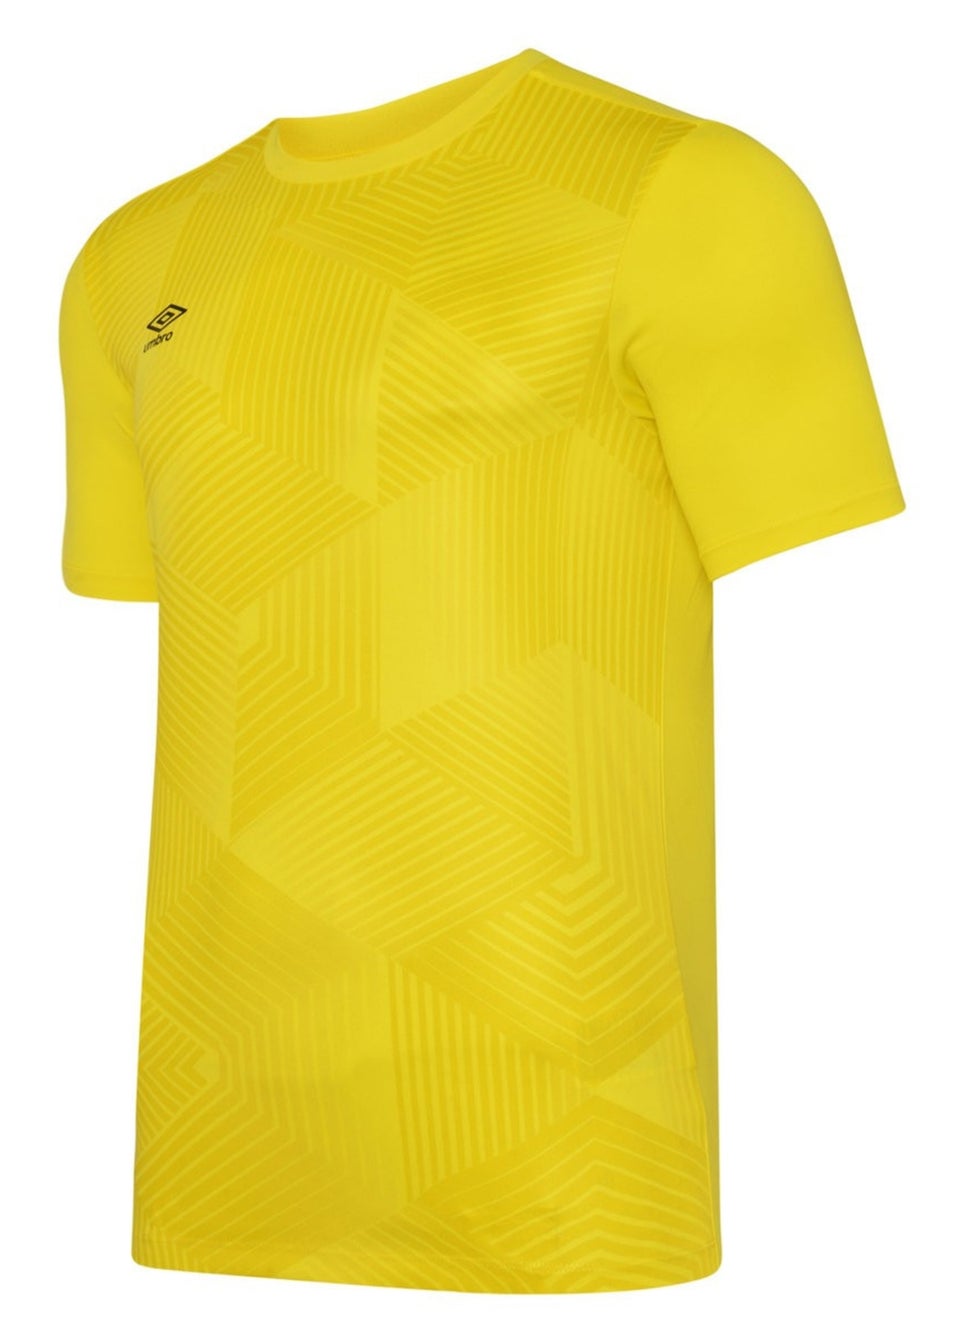 Umbro Kids Yellow Maxium Football Kit